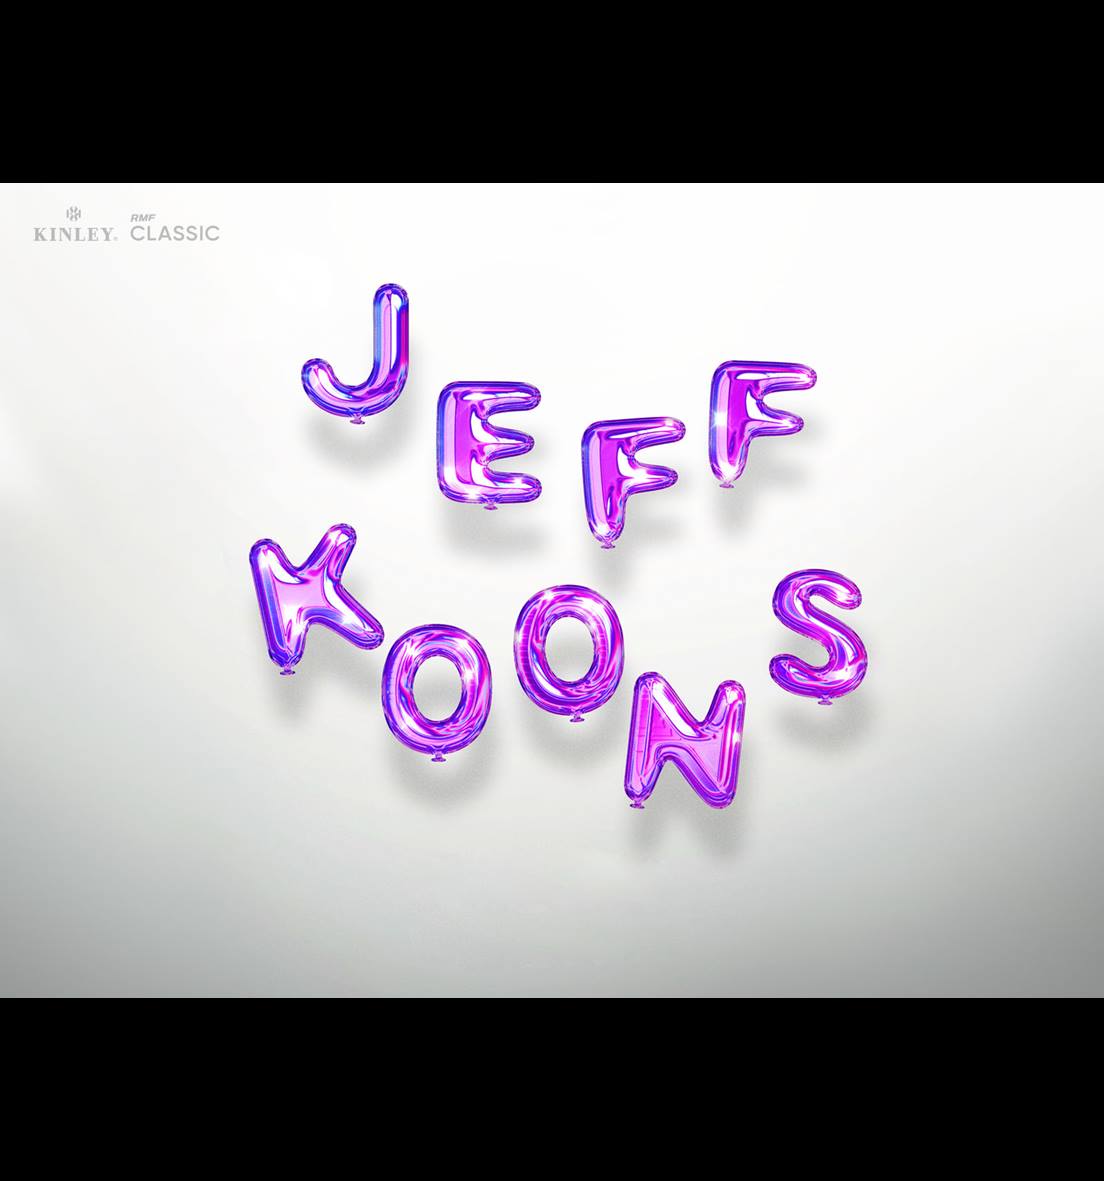 Jeff Koons. Portret Intymny